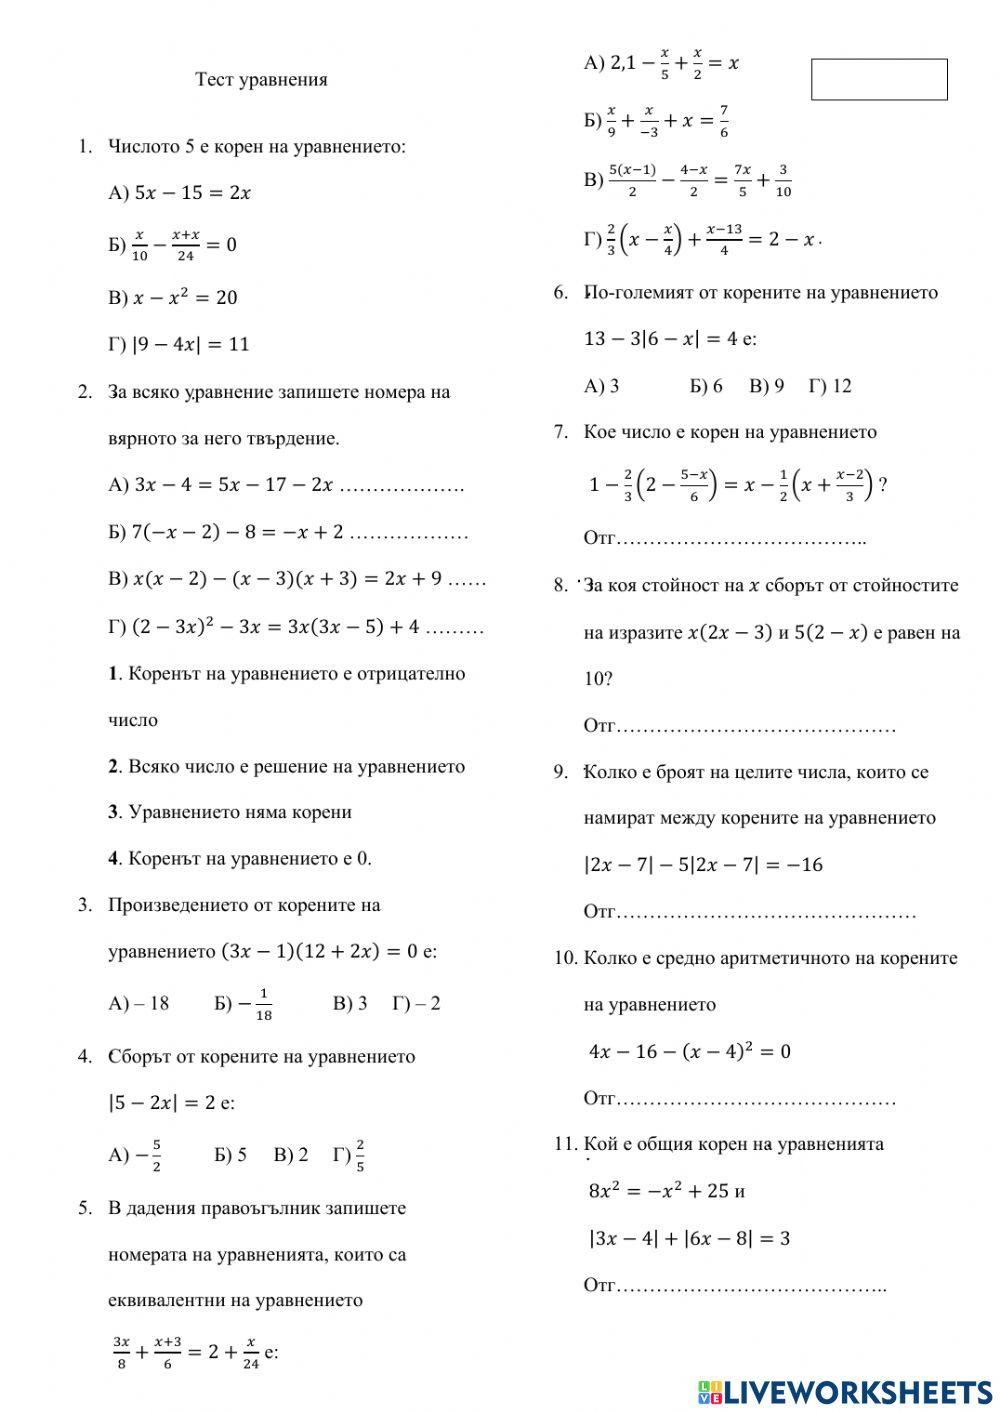 Тест уравнения 7 клас